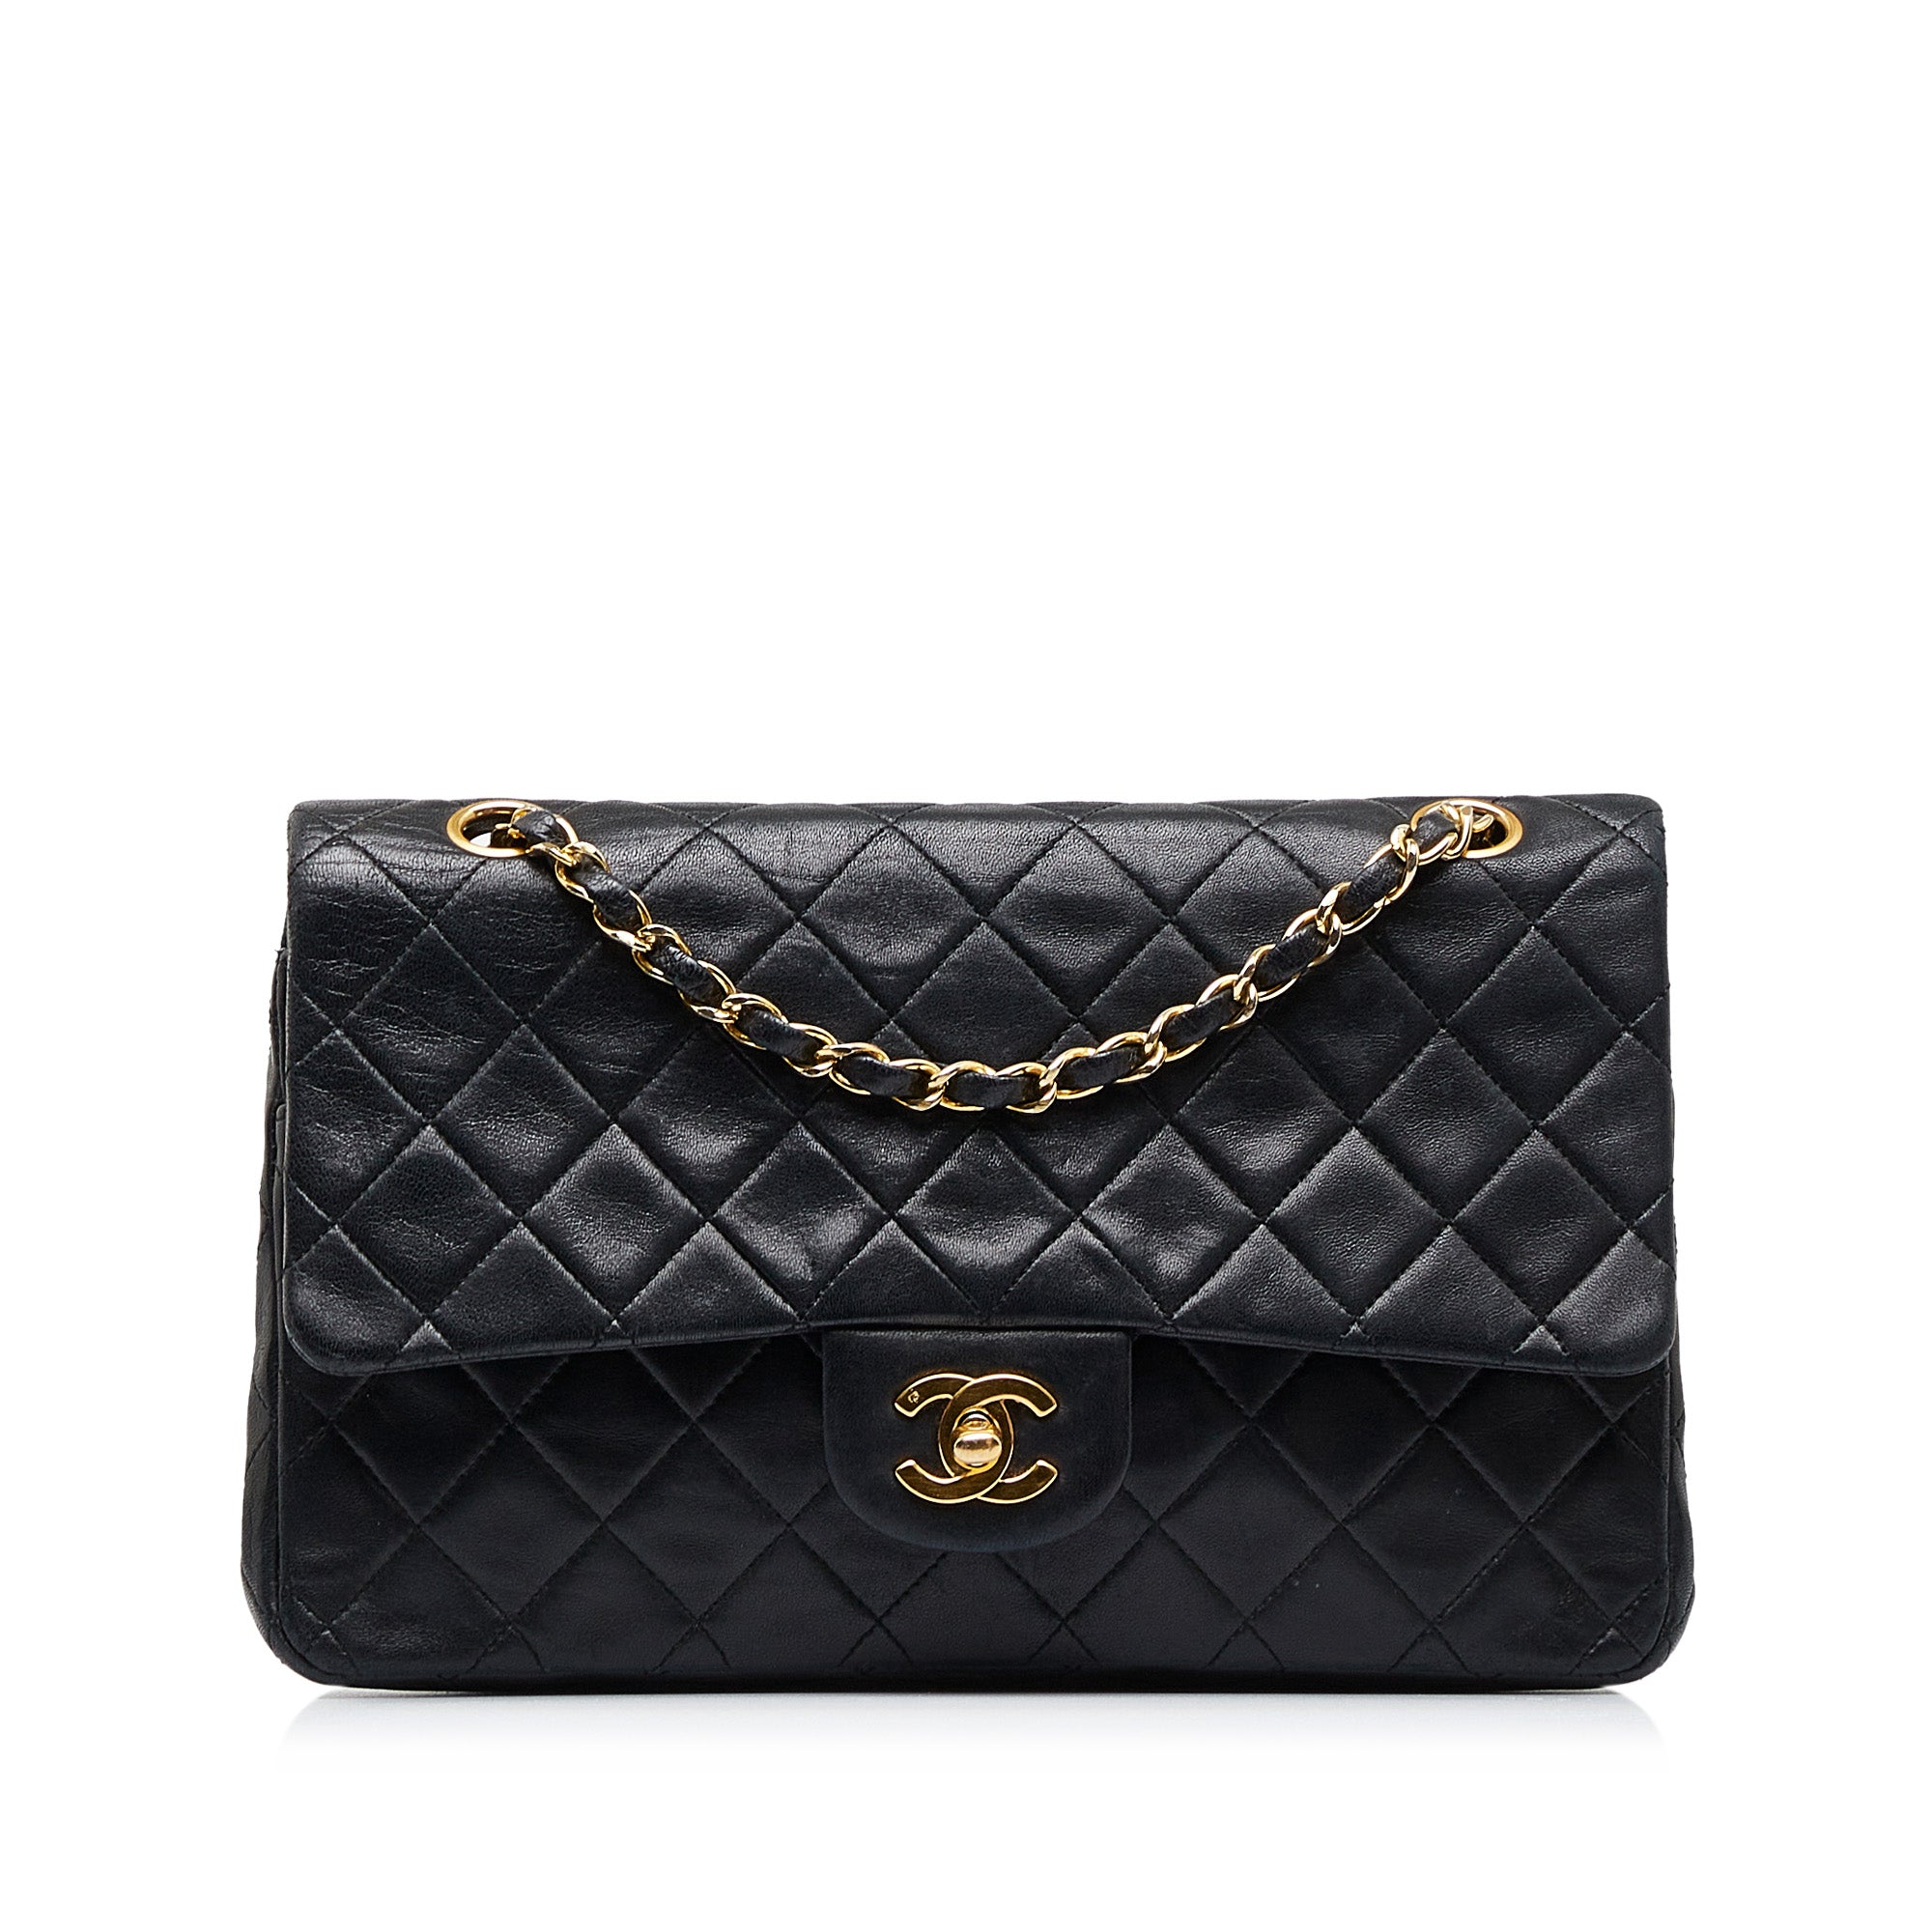 Chanel Classic Medium Double Flap, Black Caviar Leather, Silver